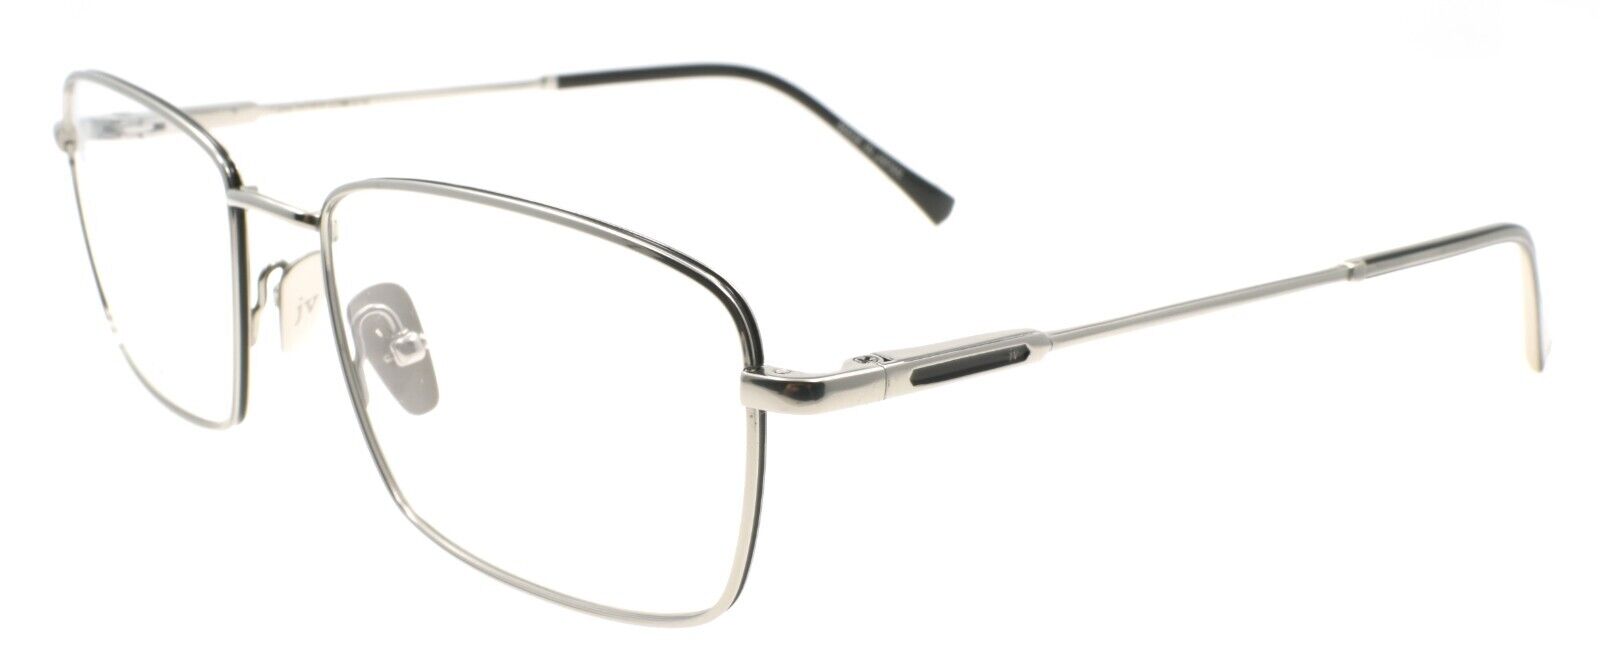 1-John Varvatos V184 Men's Eyeglasses Frames Titanium 54-17-145 Silver Japan-751286343342-IKSpecs